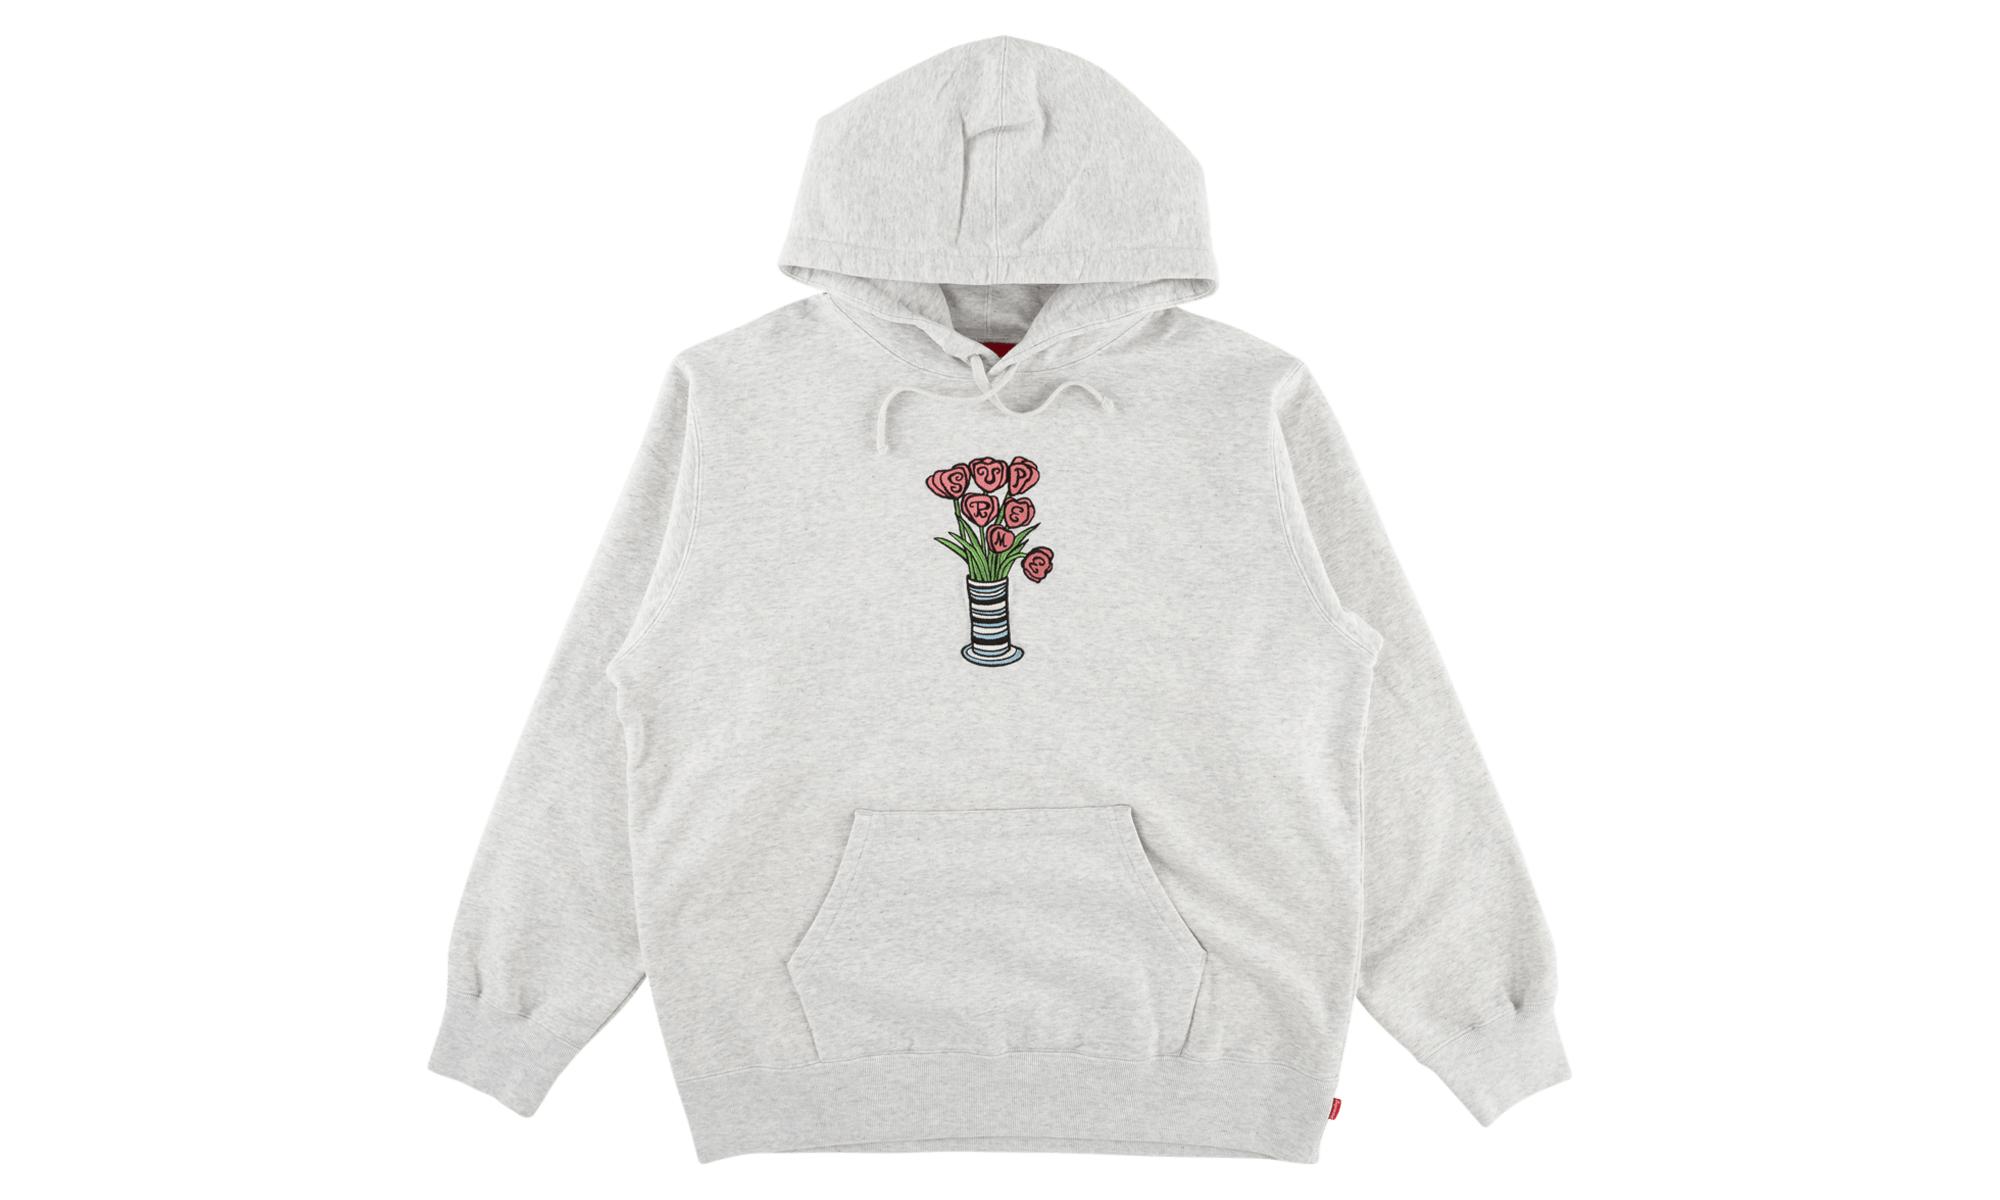 Supreme Flowers Hooded Sweatshirt in Gray for Men - Lyst